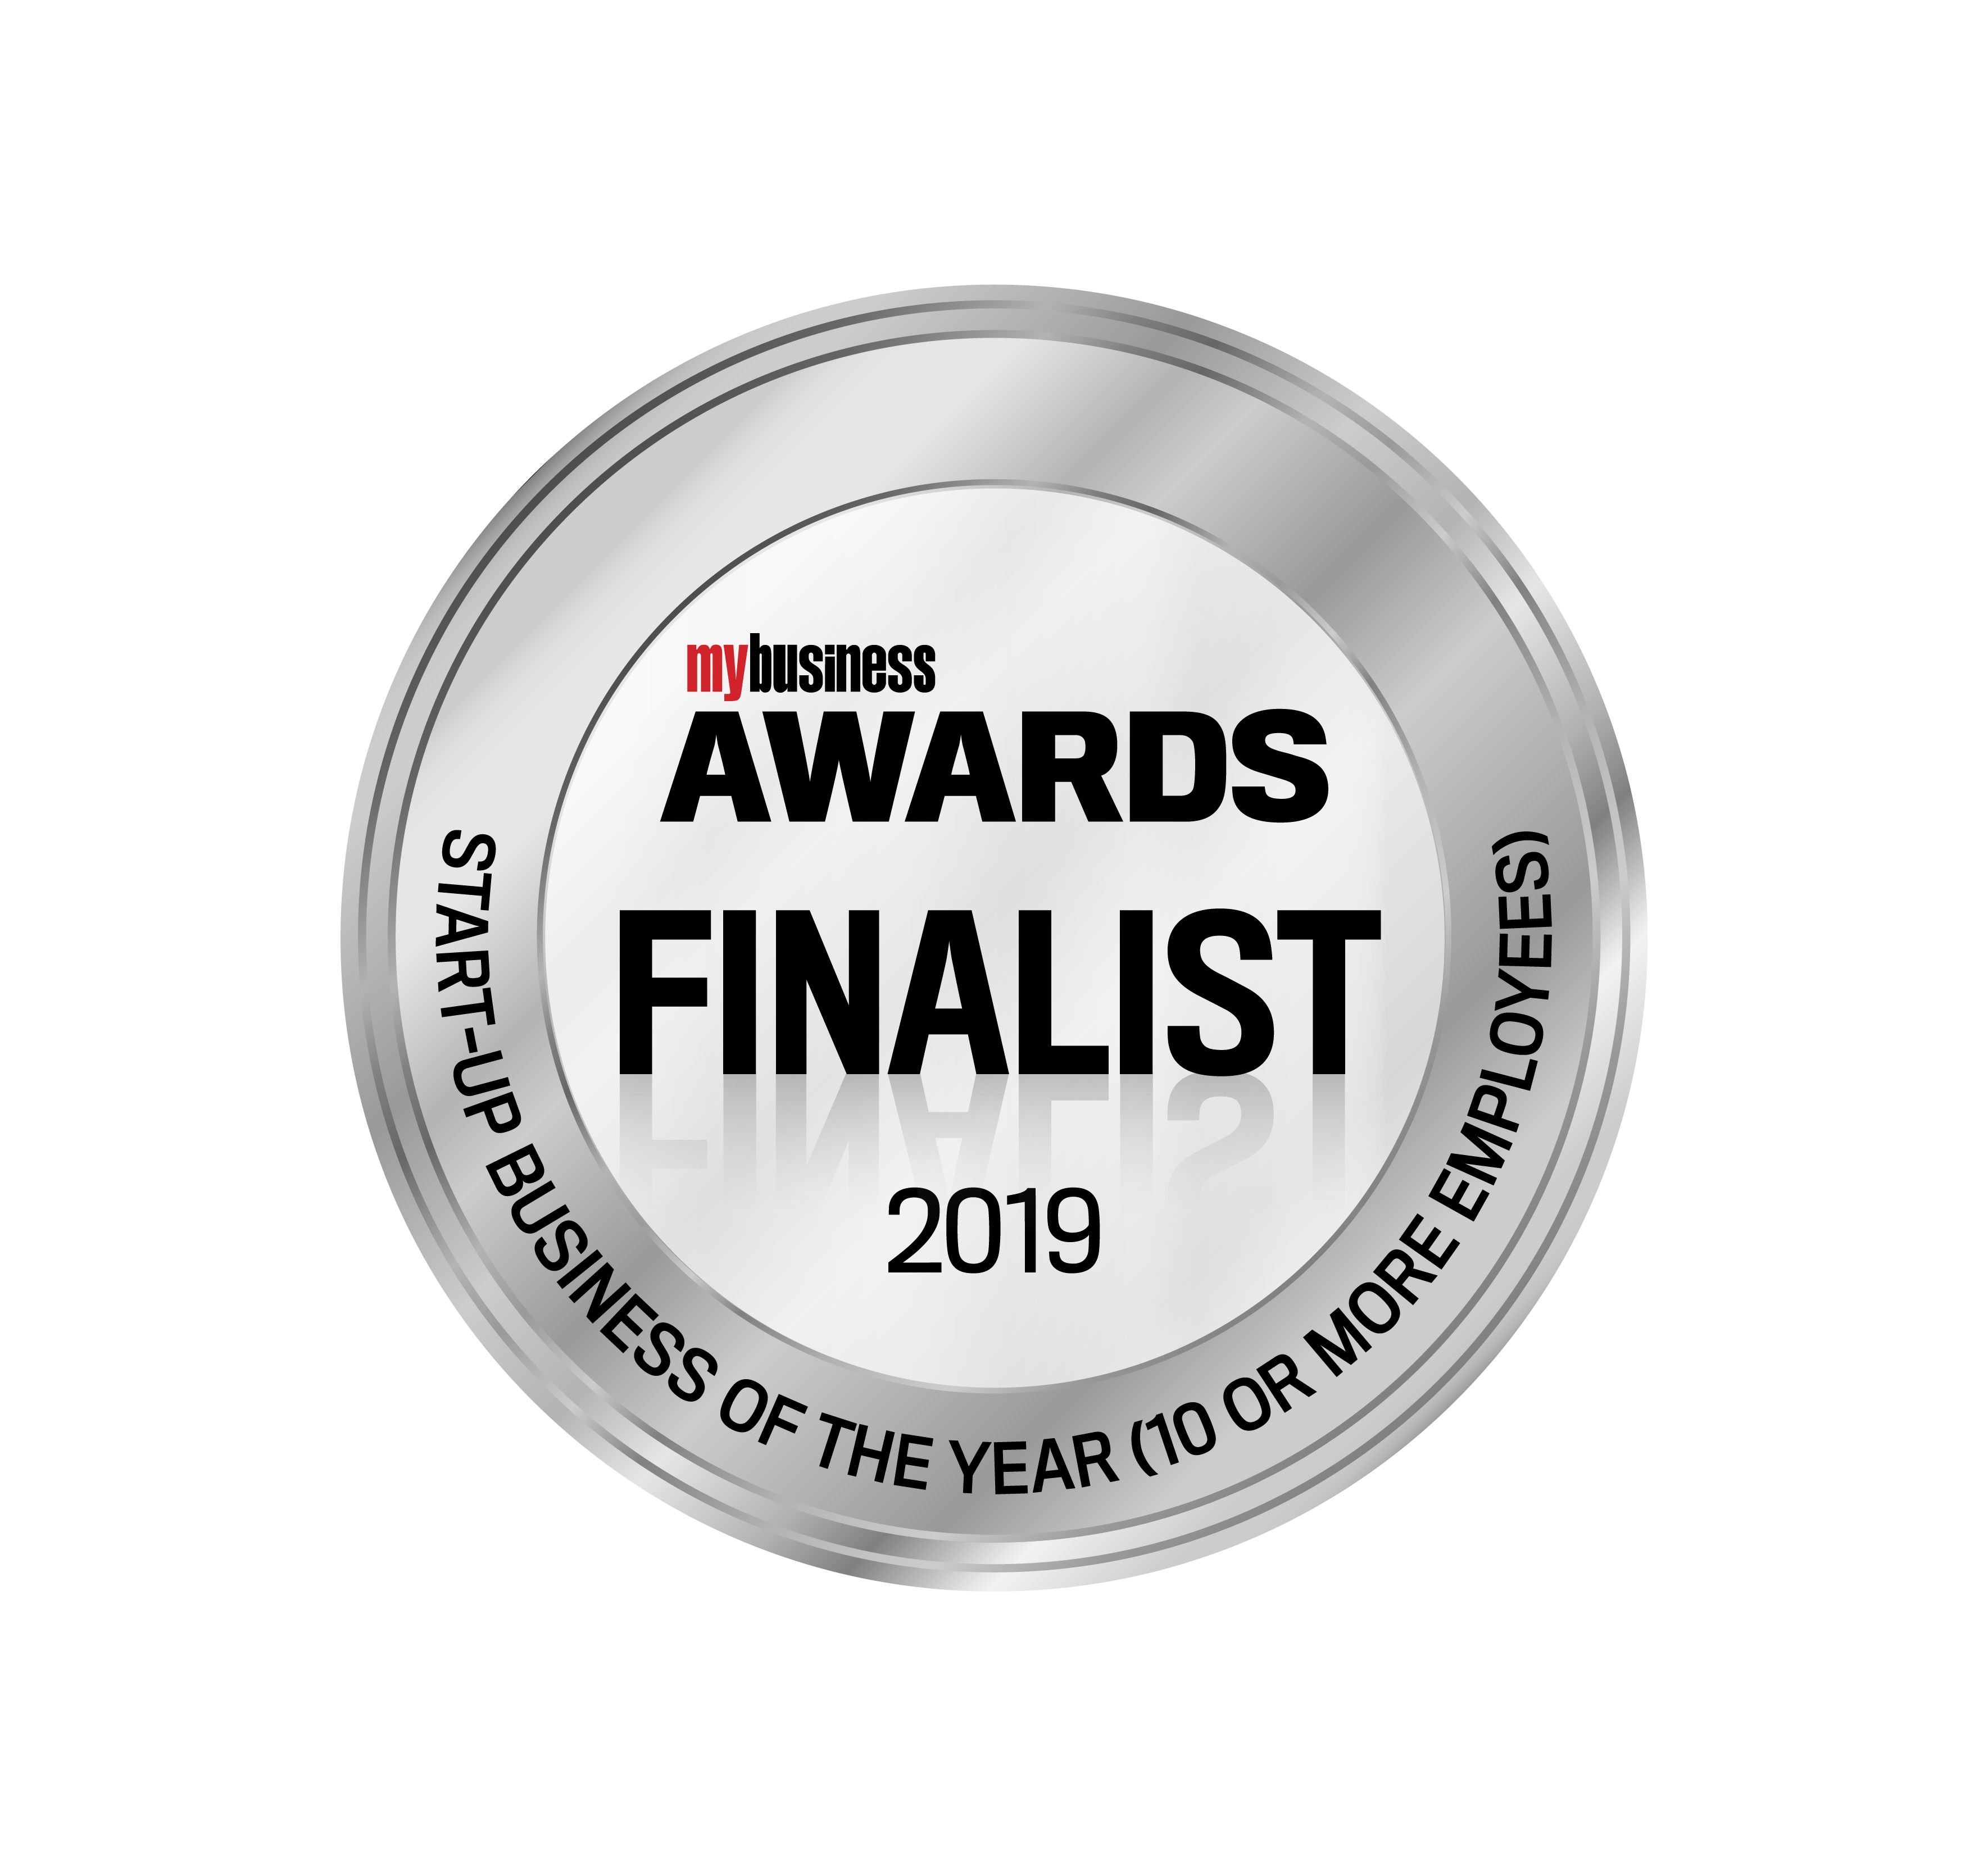 BA-Regional-Finalist-2019-Desktop-industry-awards-sydney-app-development-company